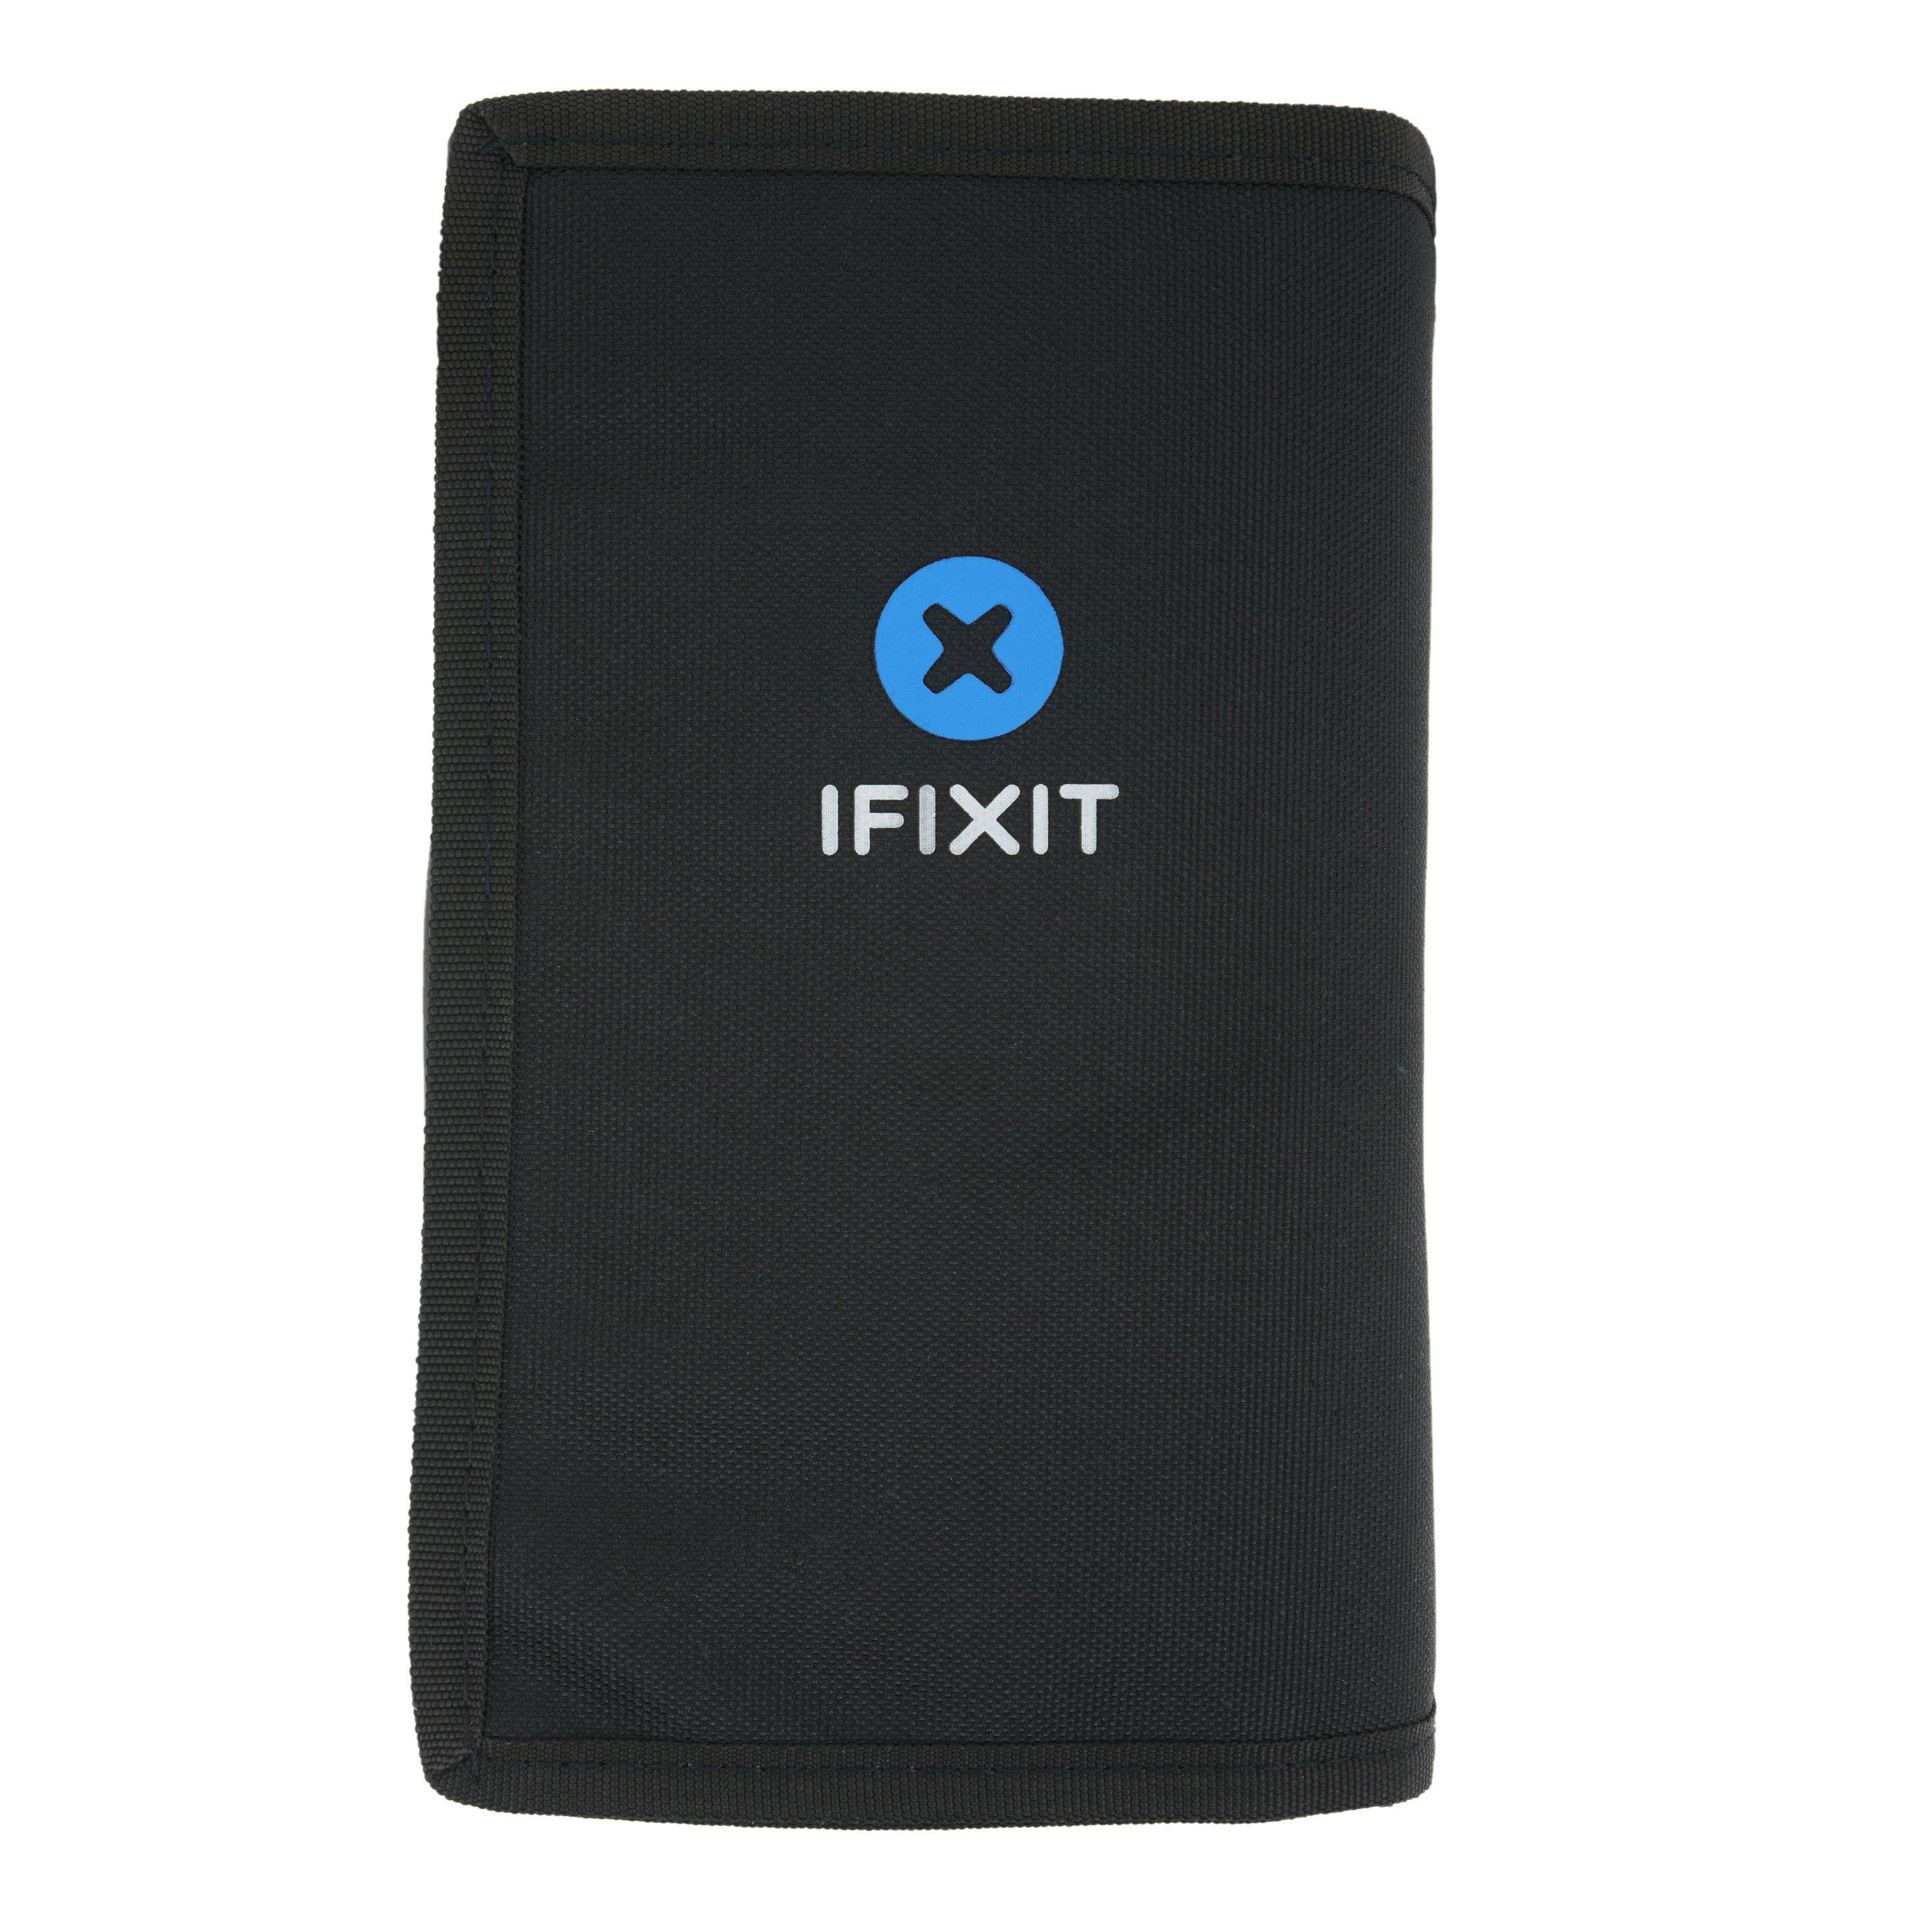 IFIXIT Pro Toolkit, universal, universal, Tech Schwarz/Blau